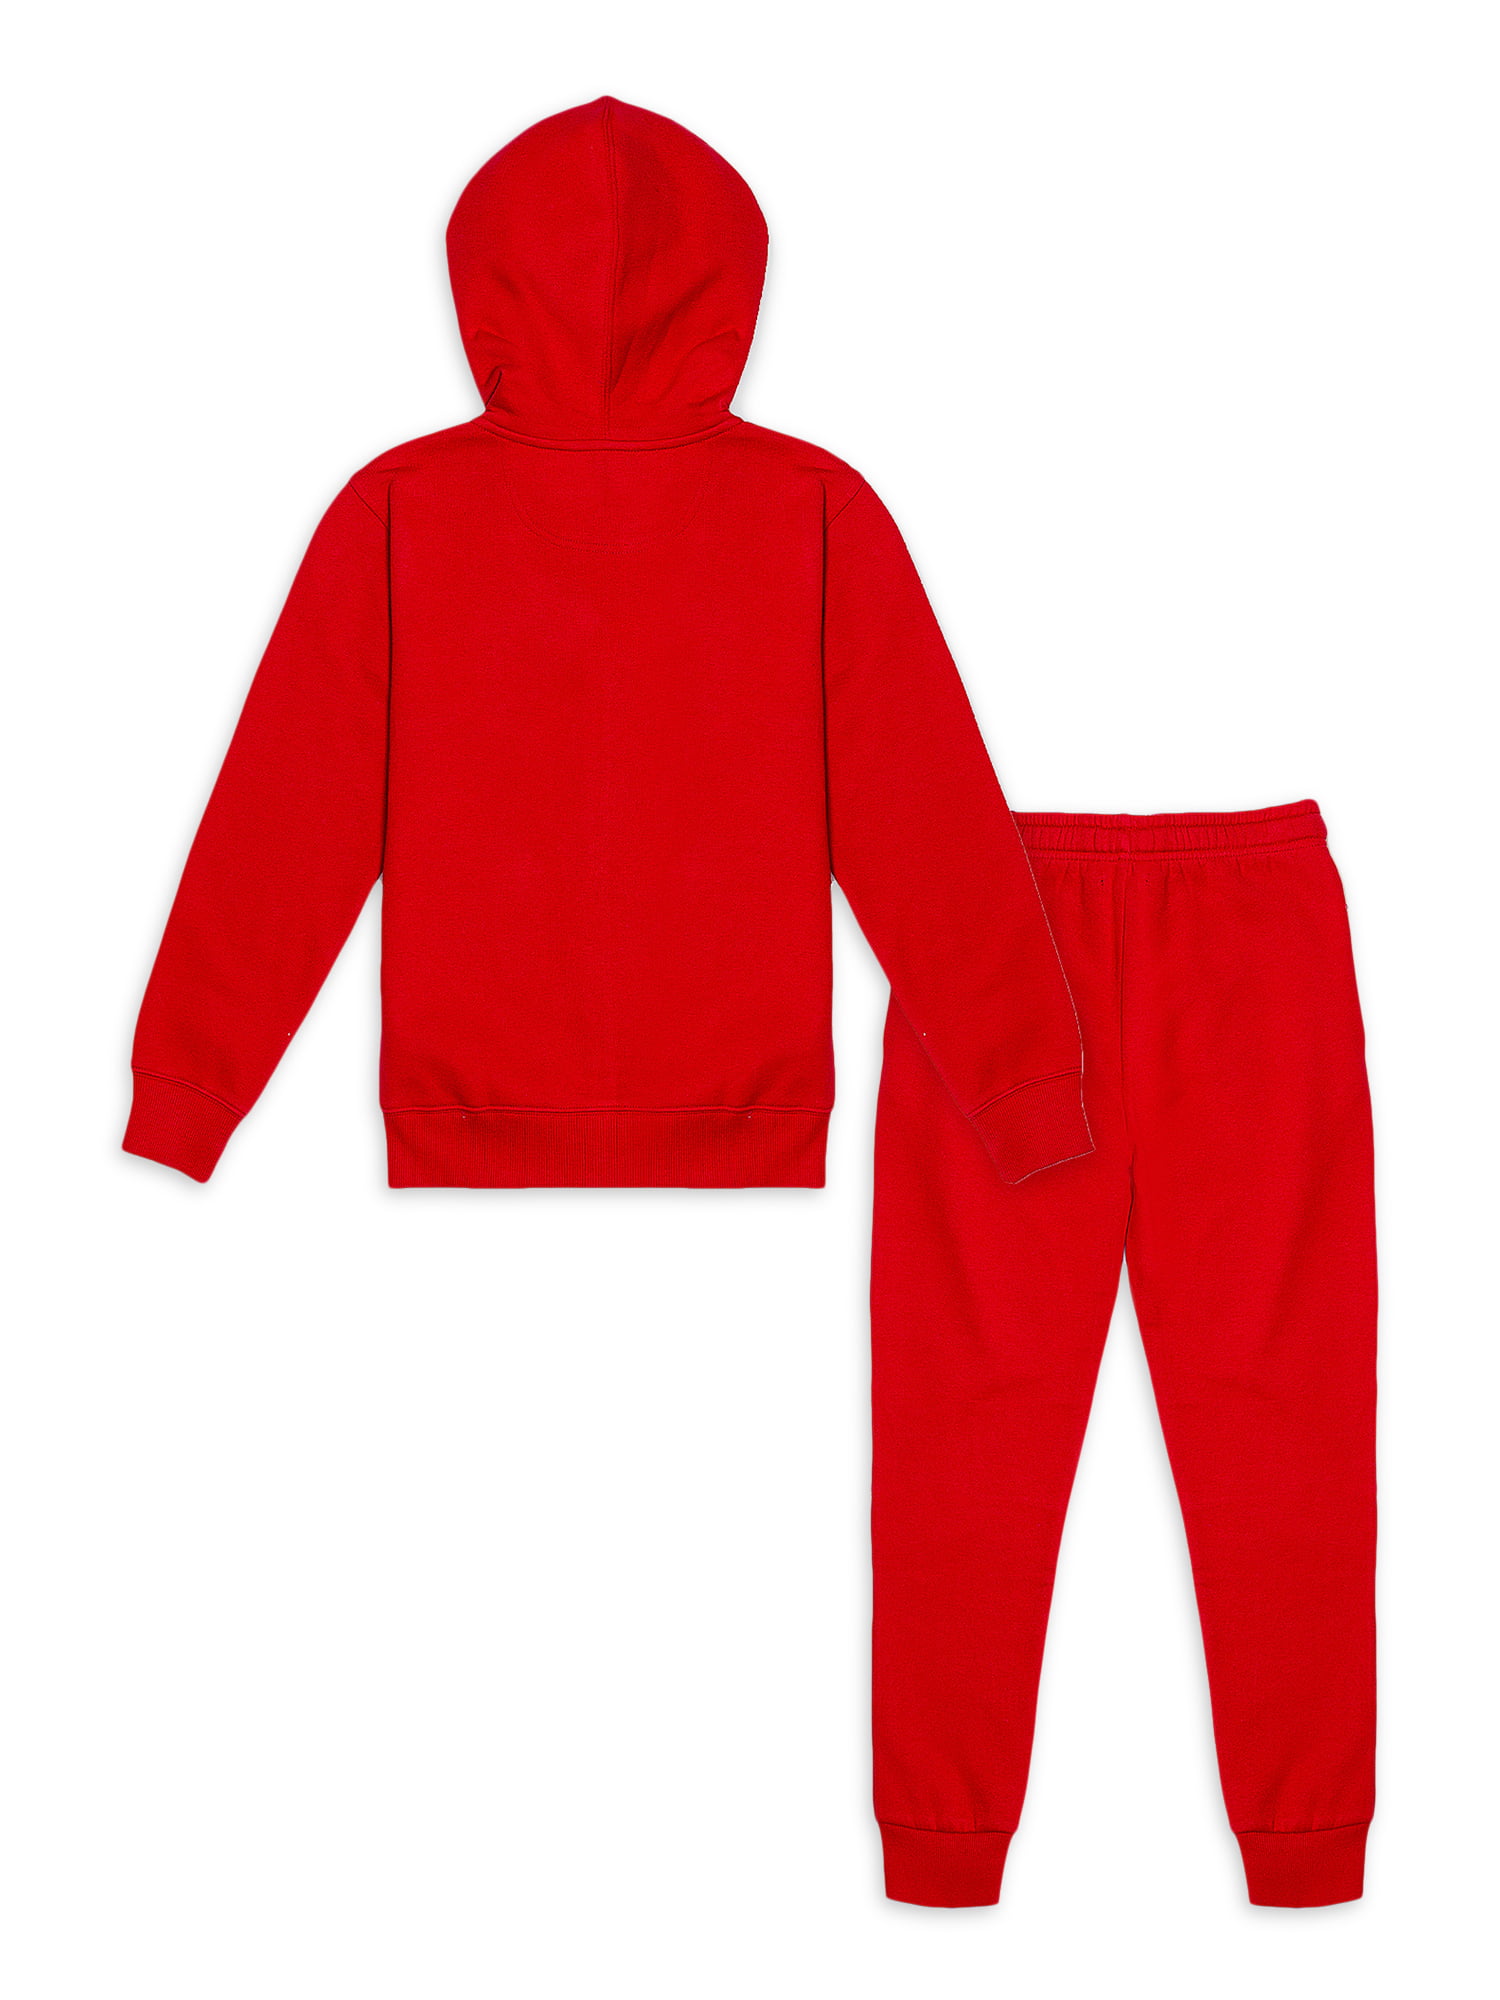 Boys Sweatsuit-Honeycomb Burgundy/Gray Hoodie Jogger Set-Outerwear 